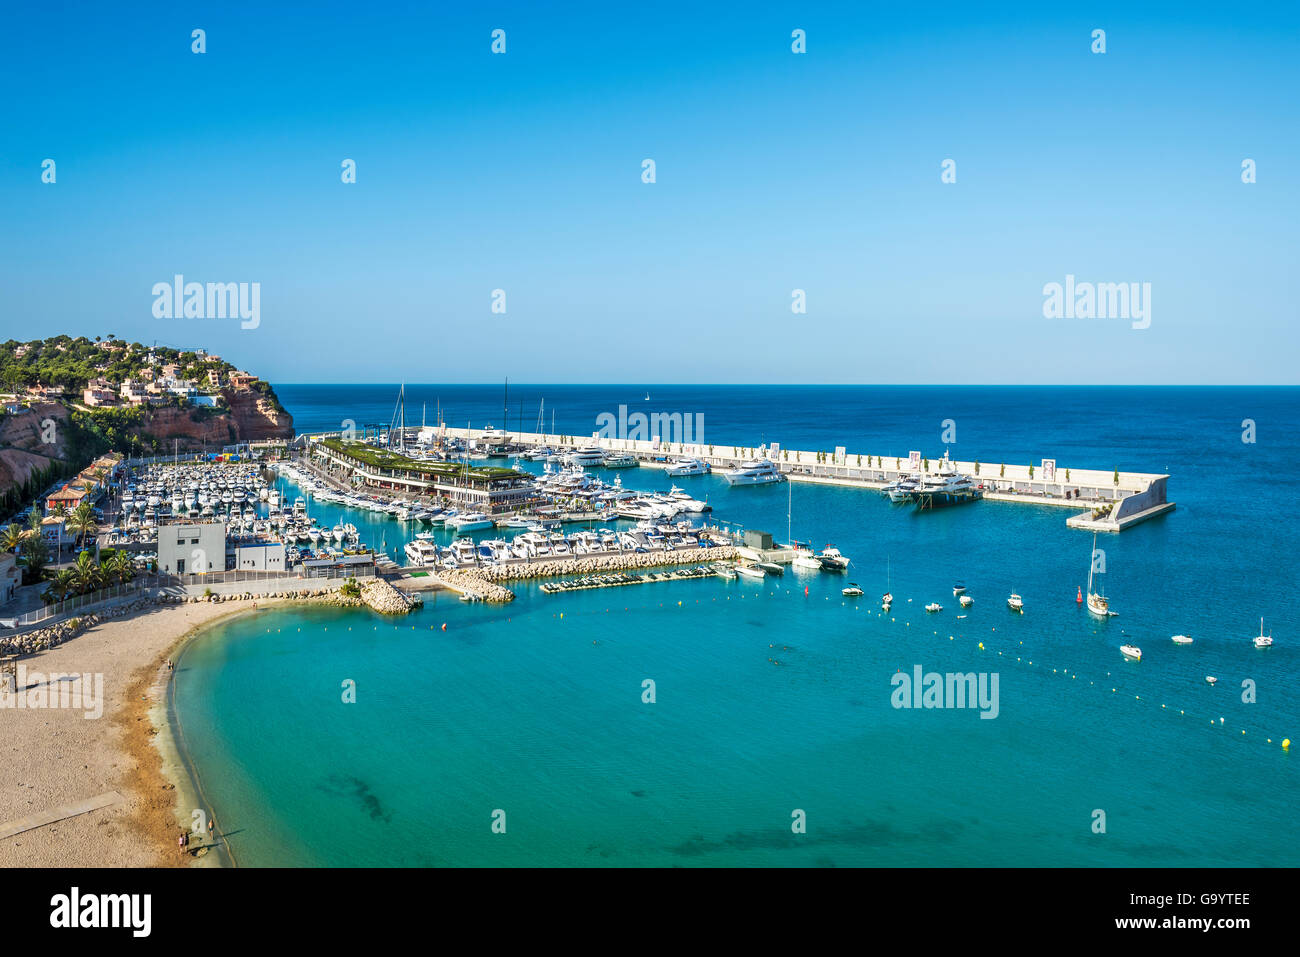 Marina of Port Adriano designed by Philippe Starck, El Toro, Majorca, Spain, Europe Stock Photo